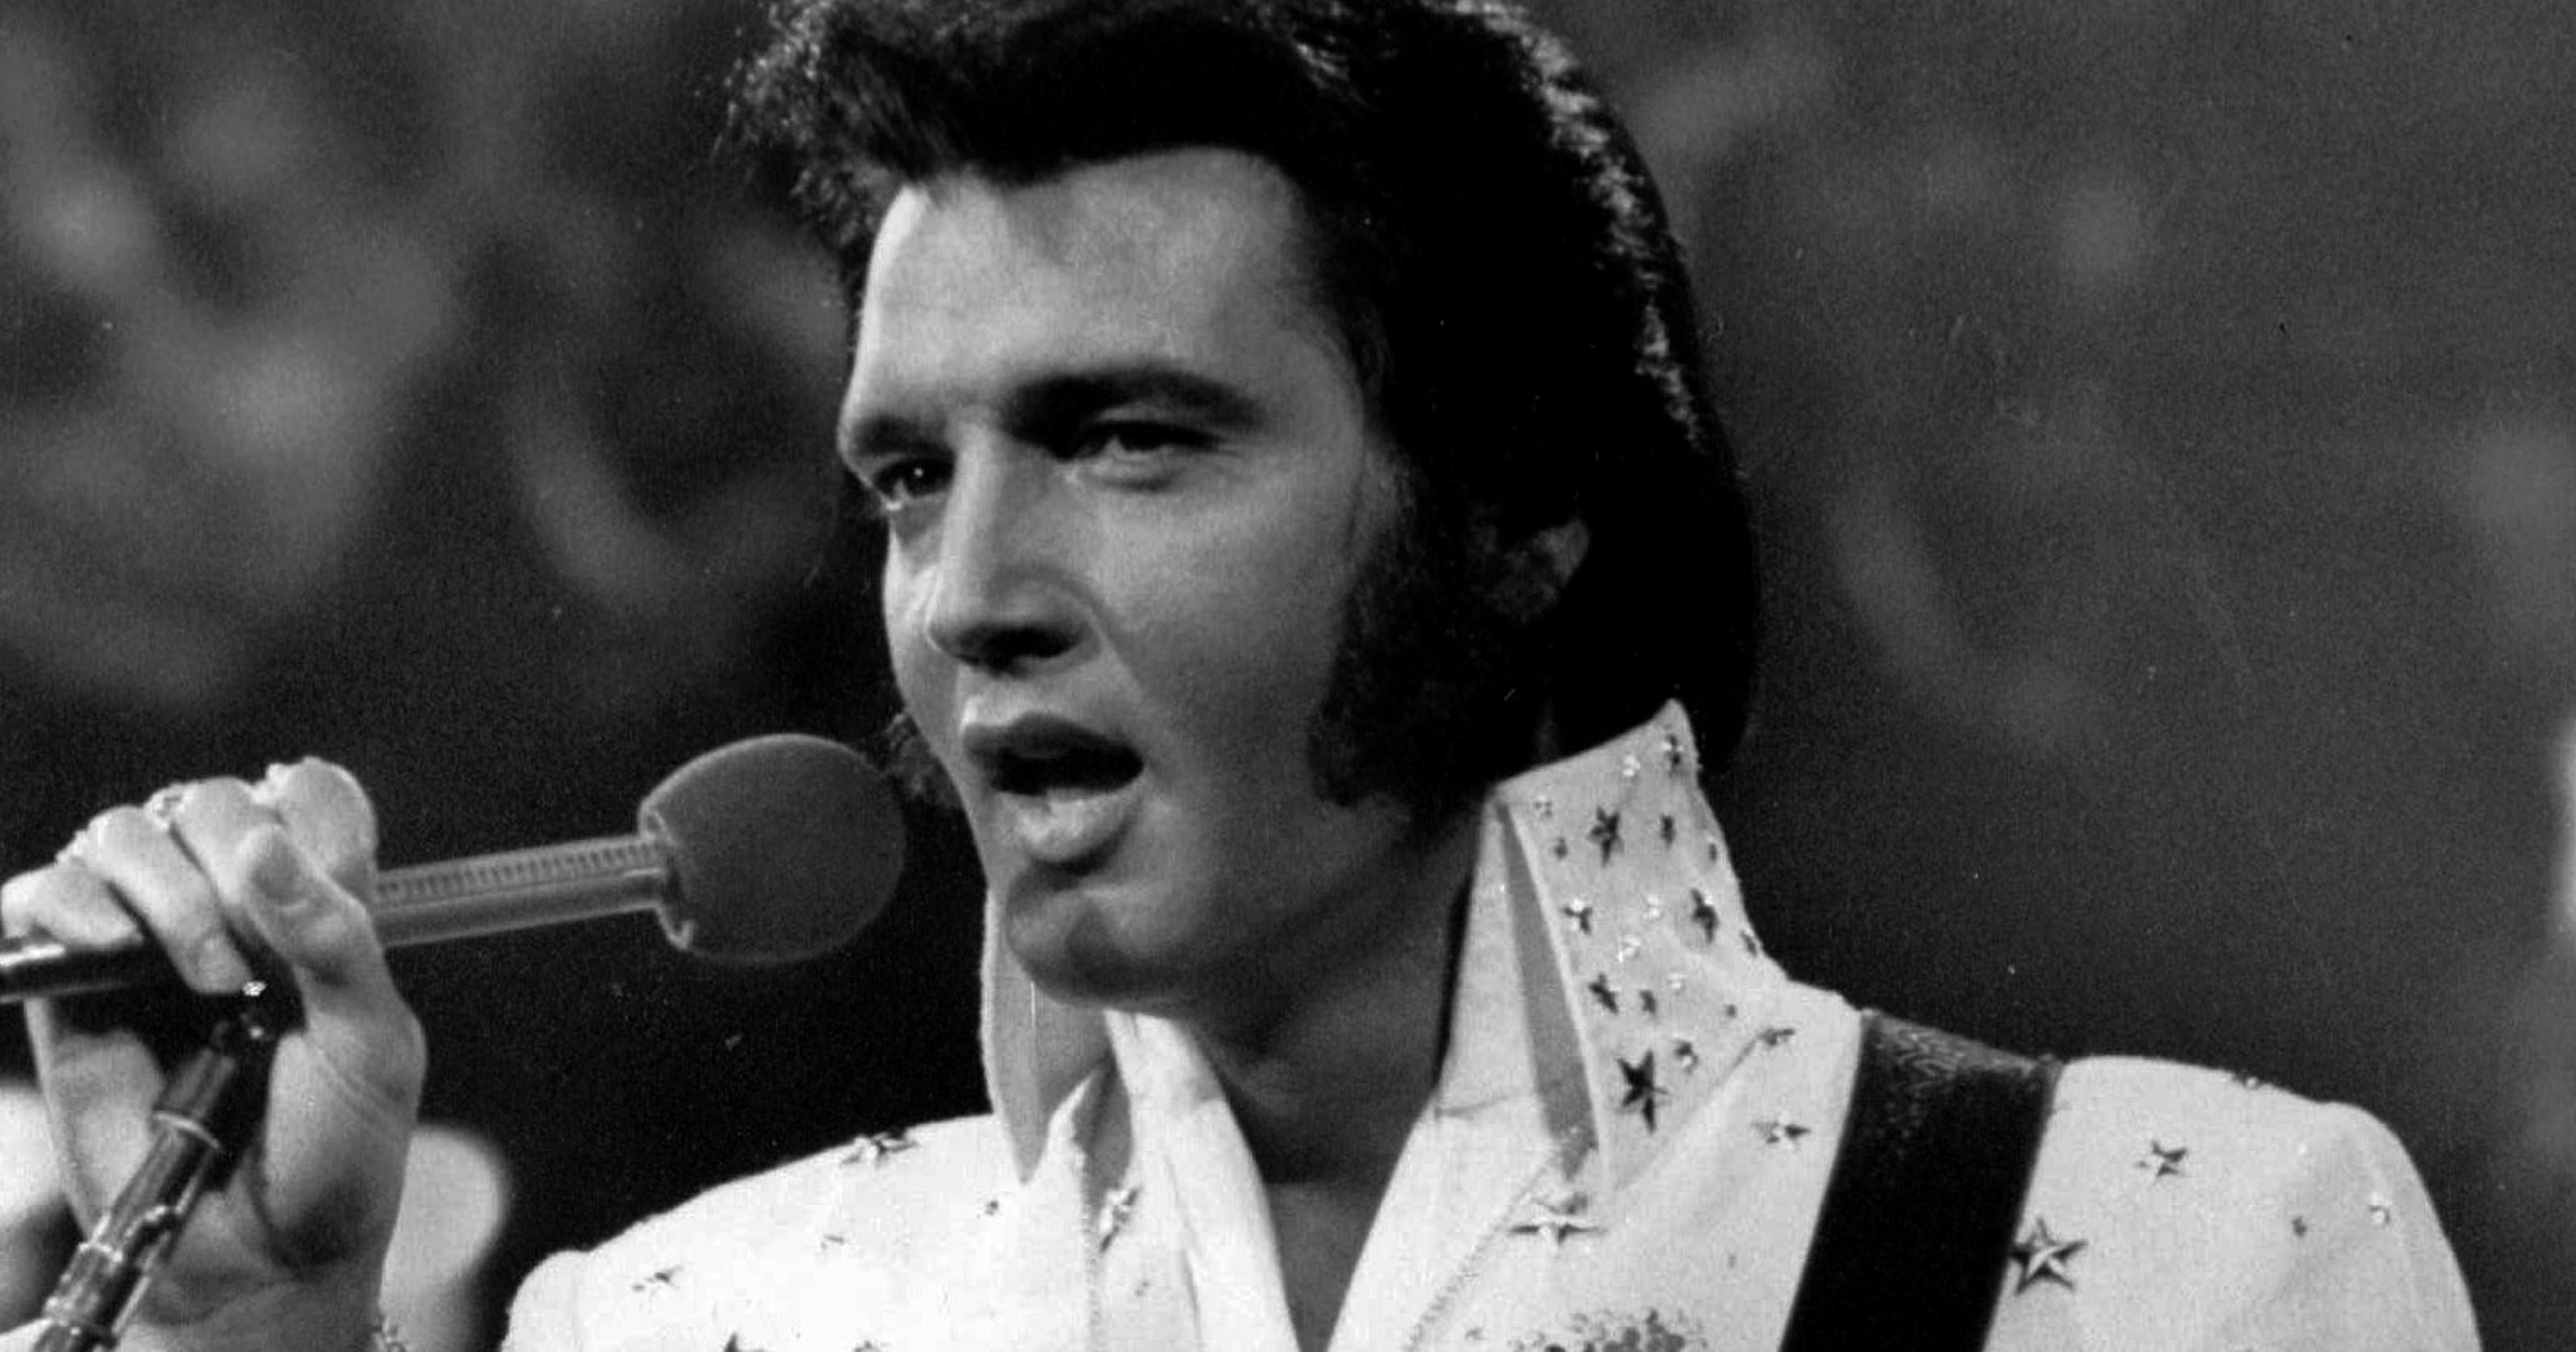 Elvis: How rock 'n' roll style got all shook up